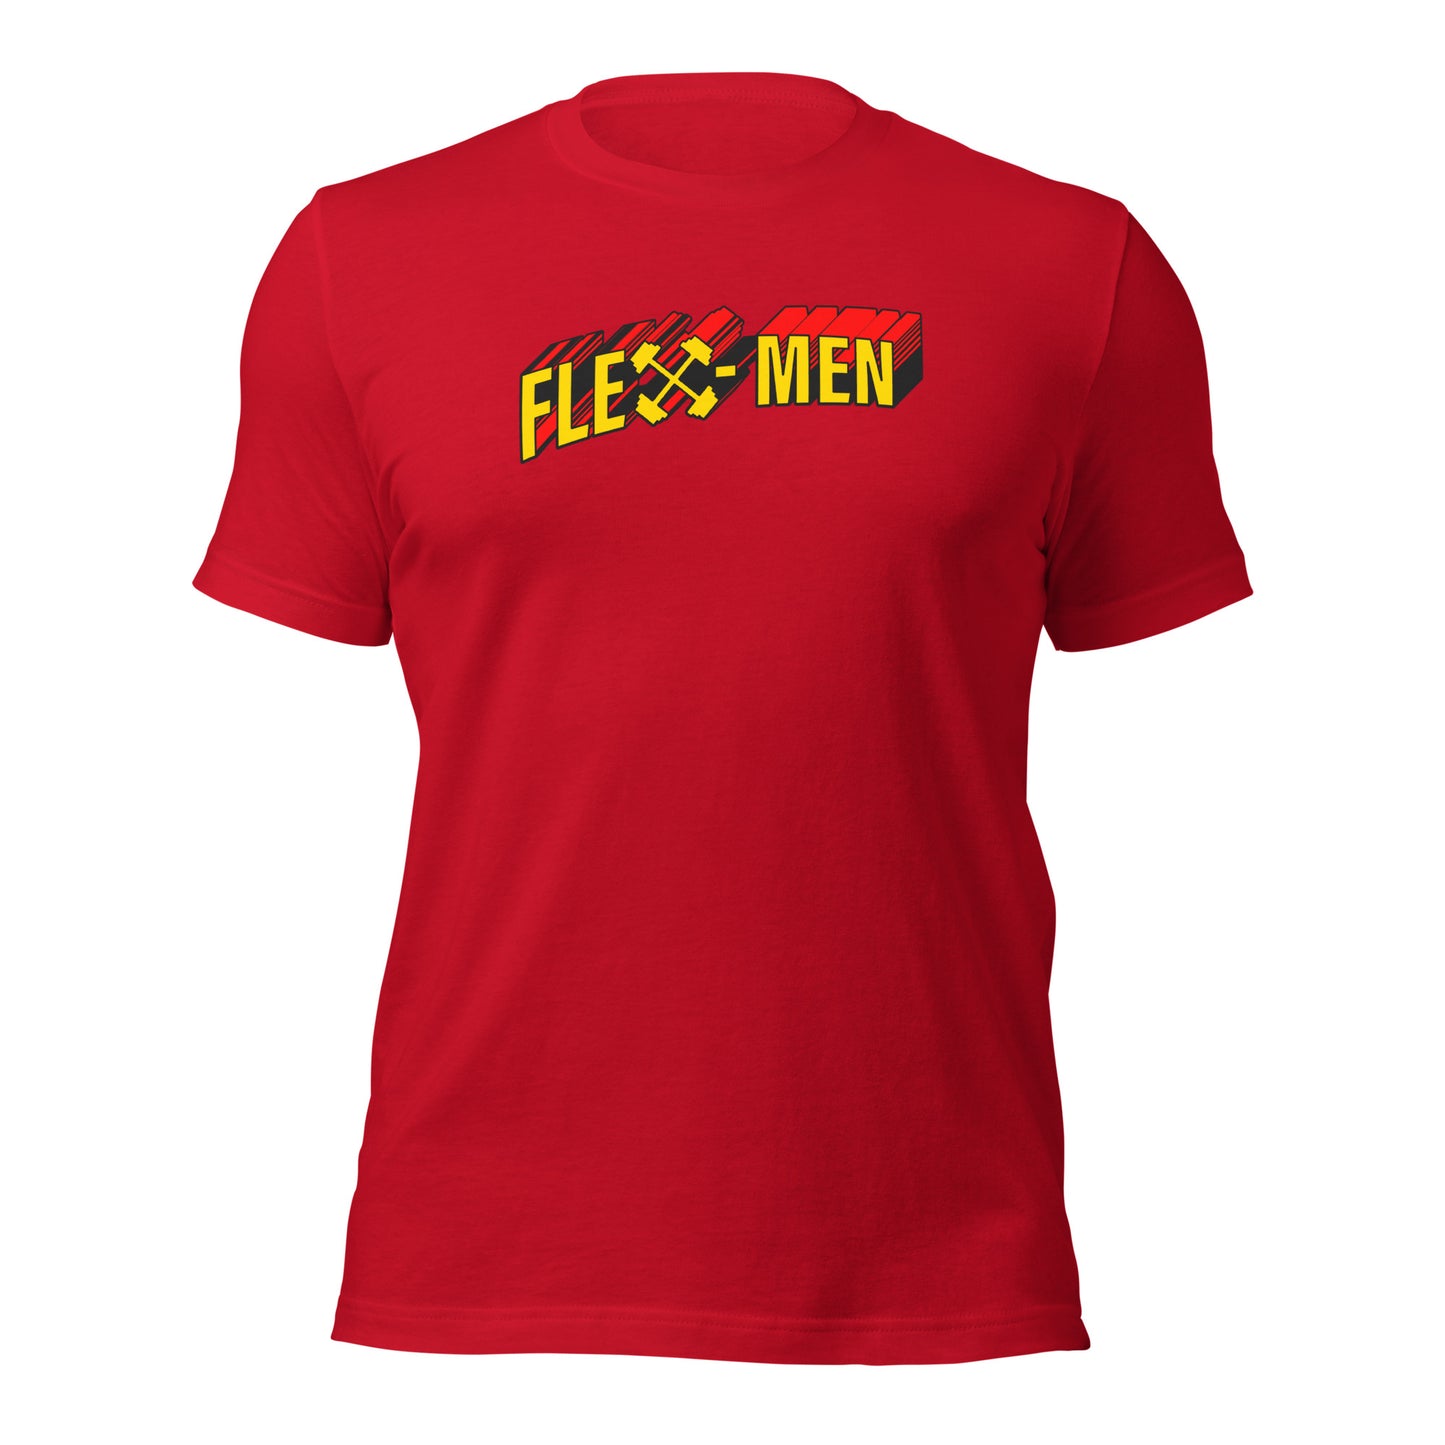 "Flex Men" Unisex t-shirt